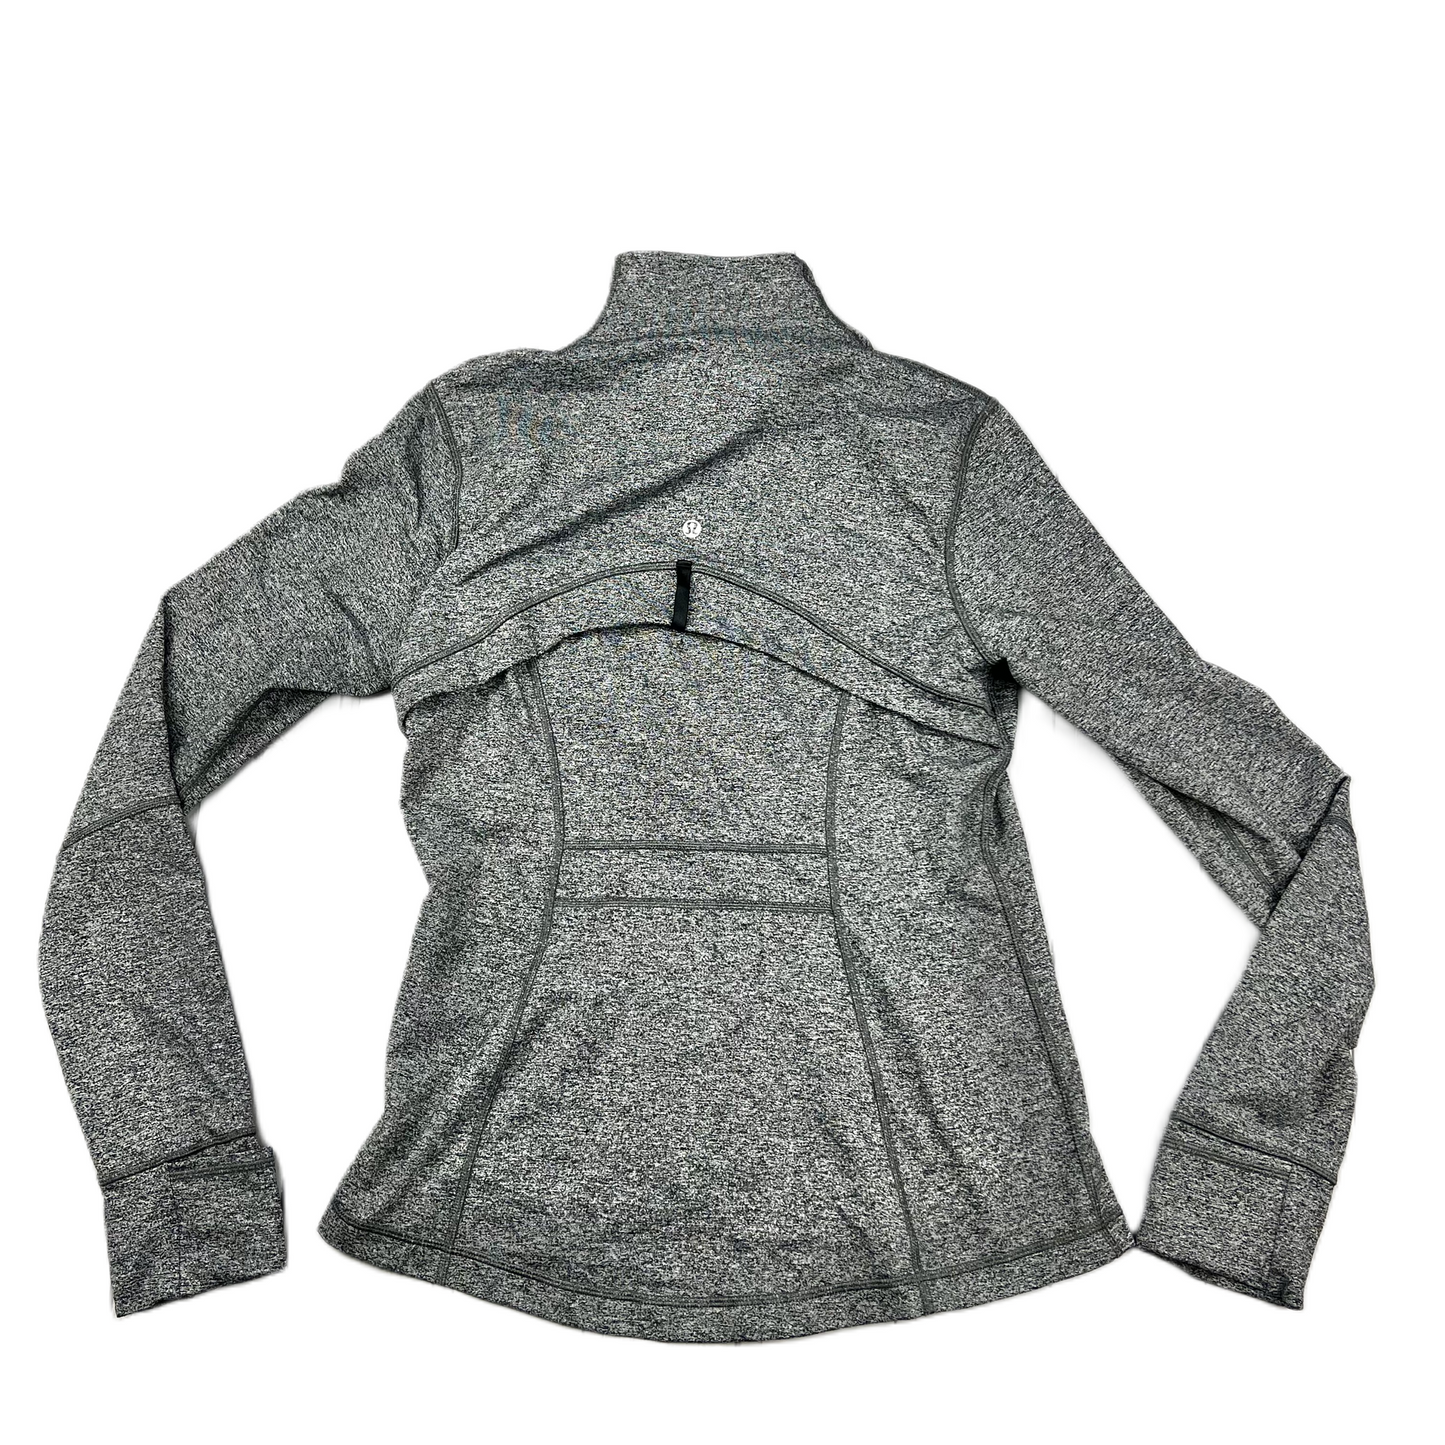 Black & Grey Athletic Jacket By Lululemon, Size: L